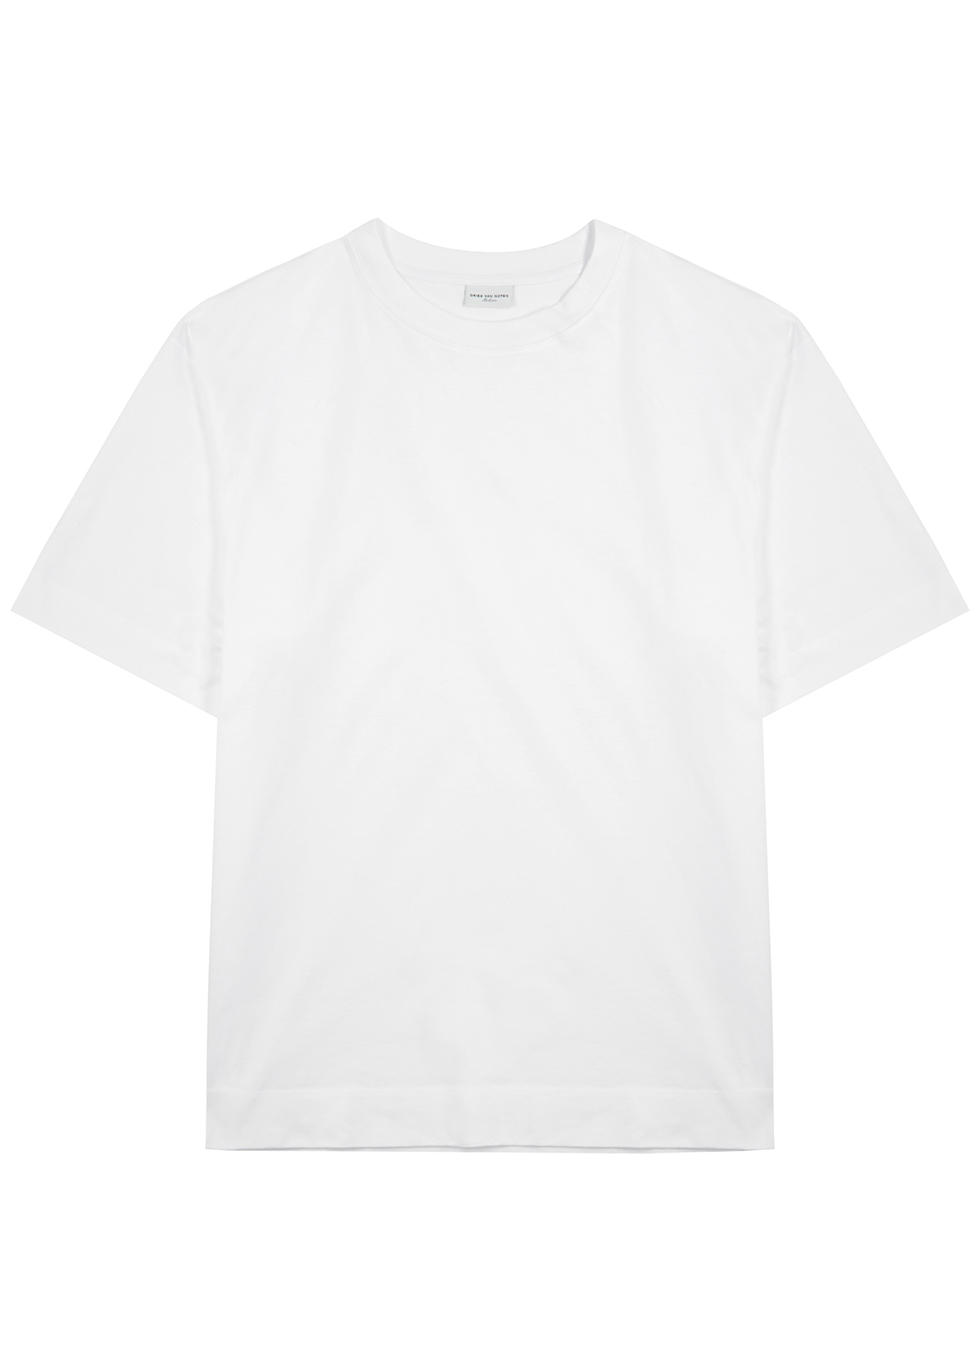 Dries Van Noten Heli white cotton T-shirt - Harvey Nichols